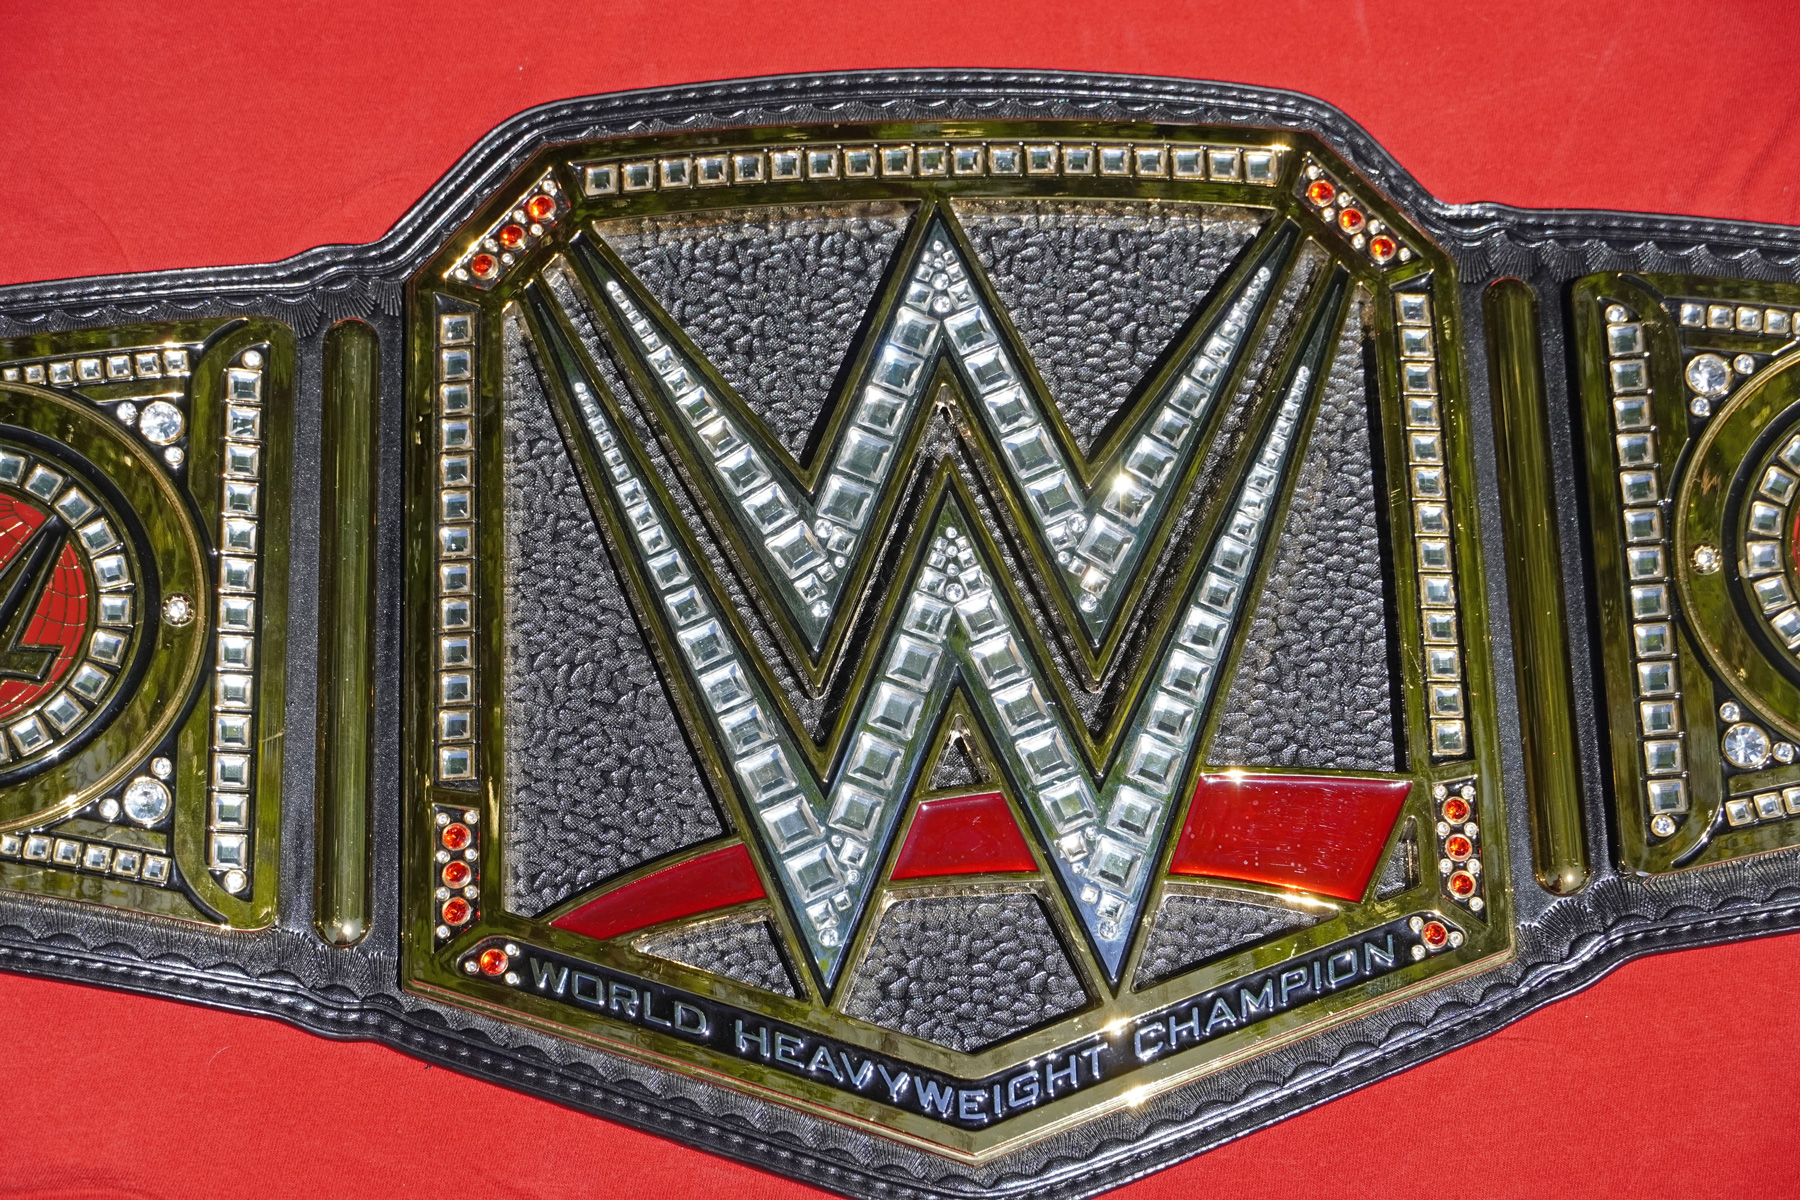 WWE Championship 2014 Commemorative Belt Review - WWE Shop